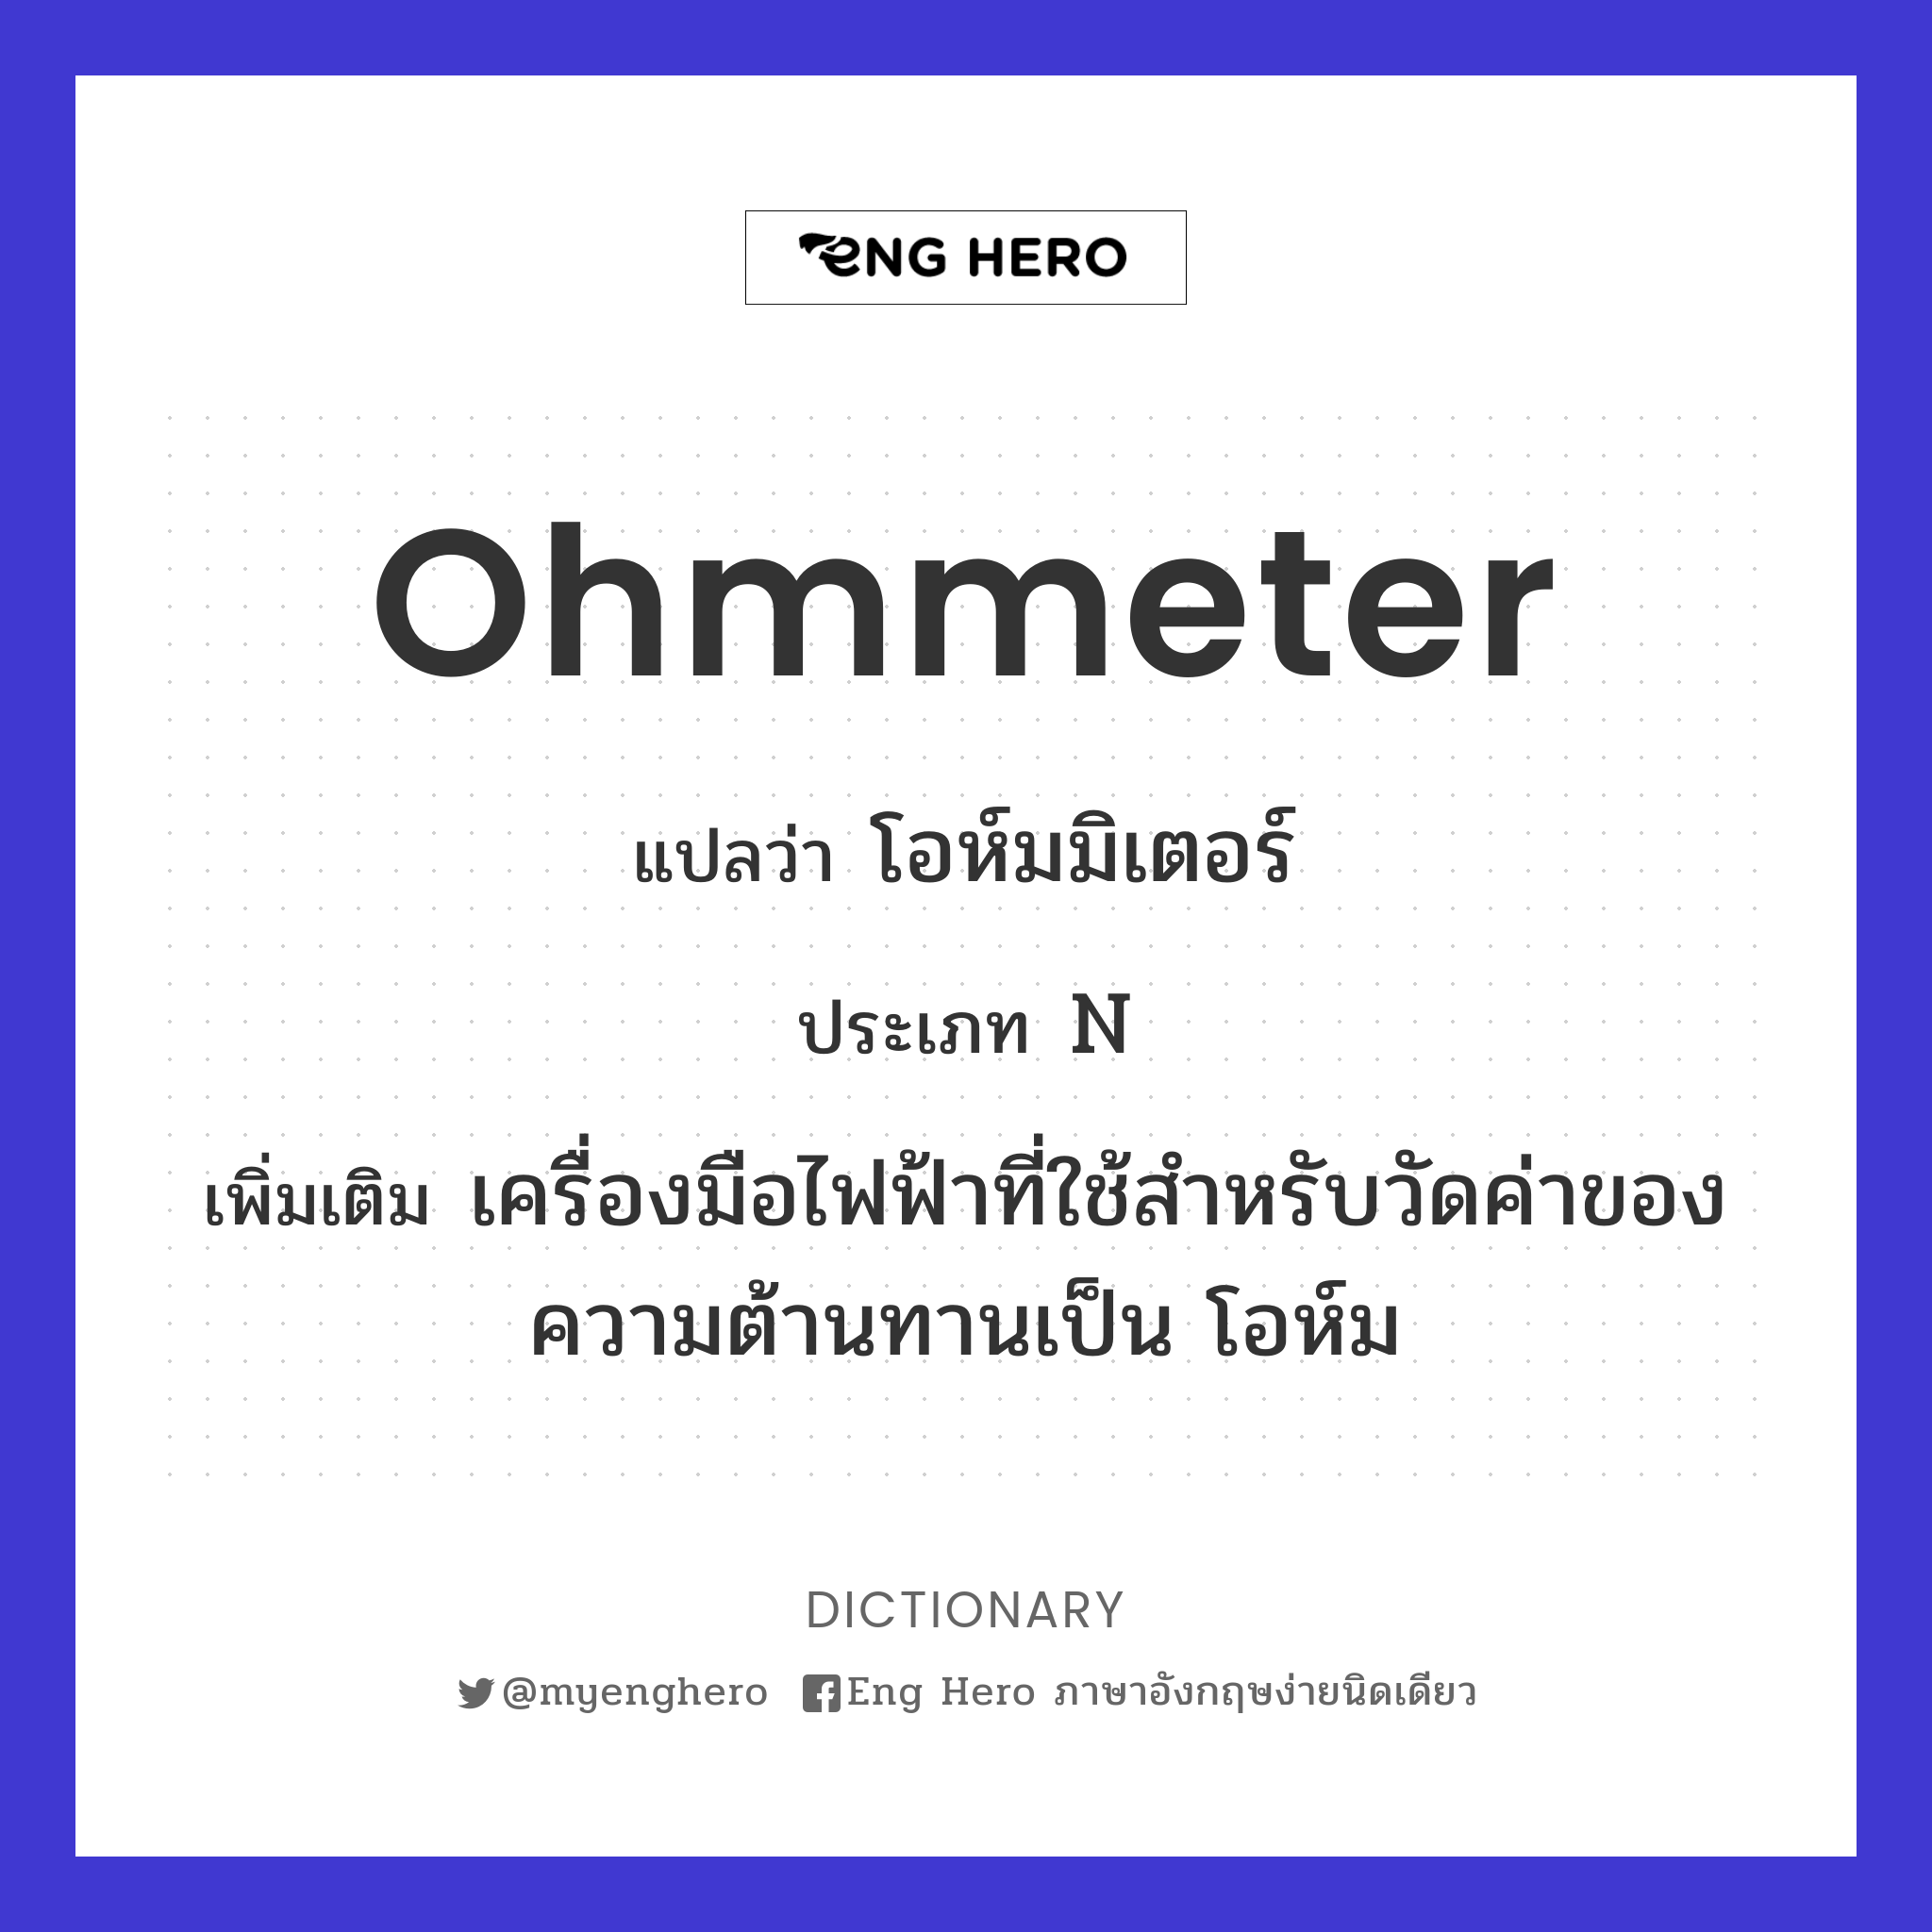 ohmmeter